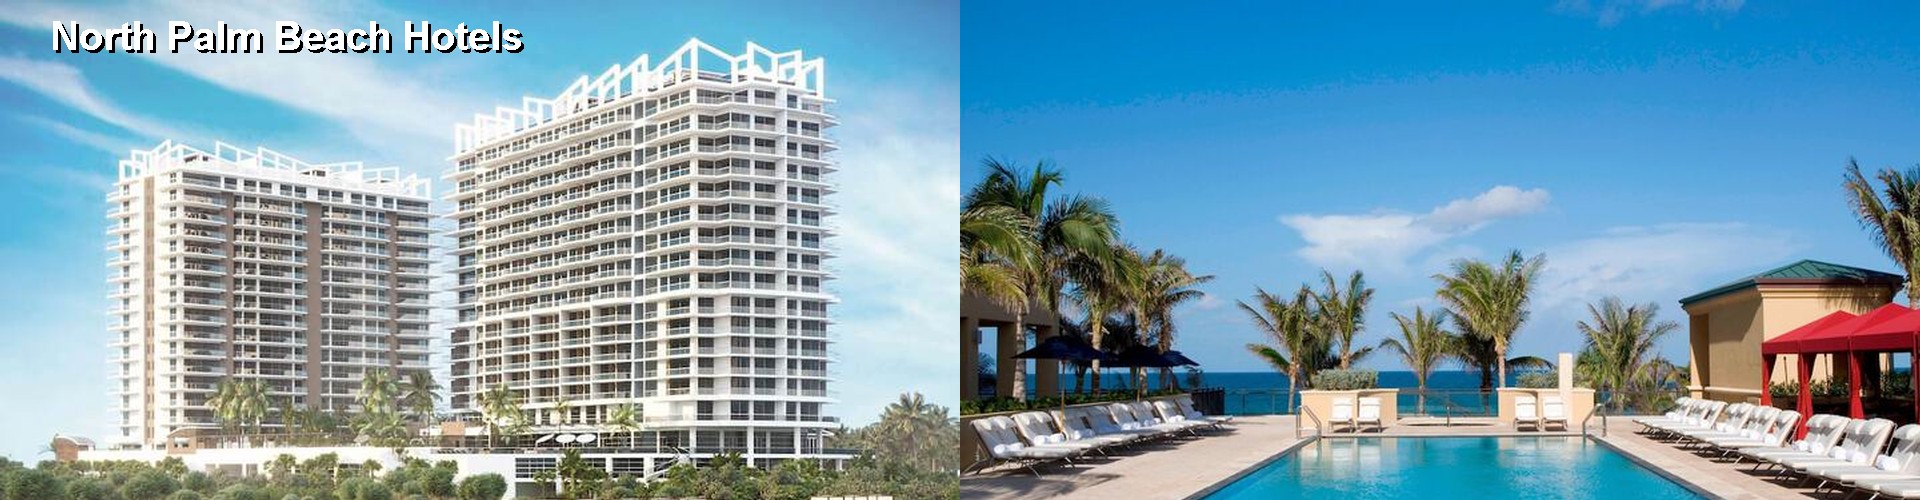 5 Best Hotels near North Palm Beach